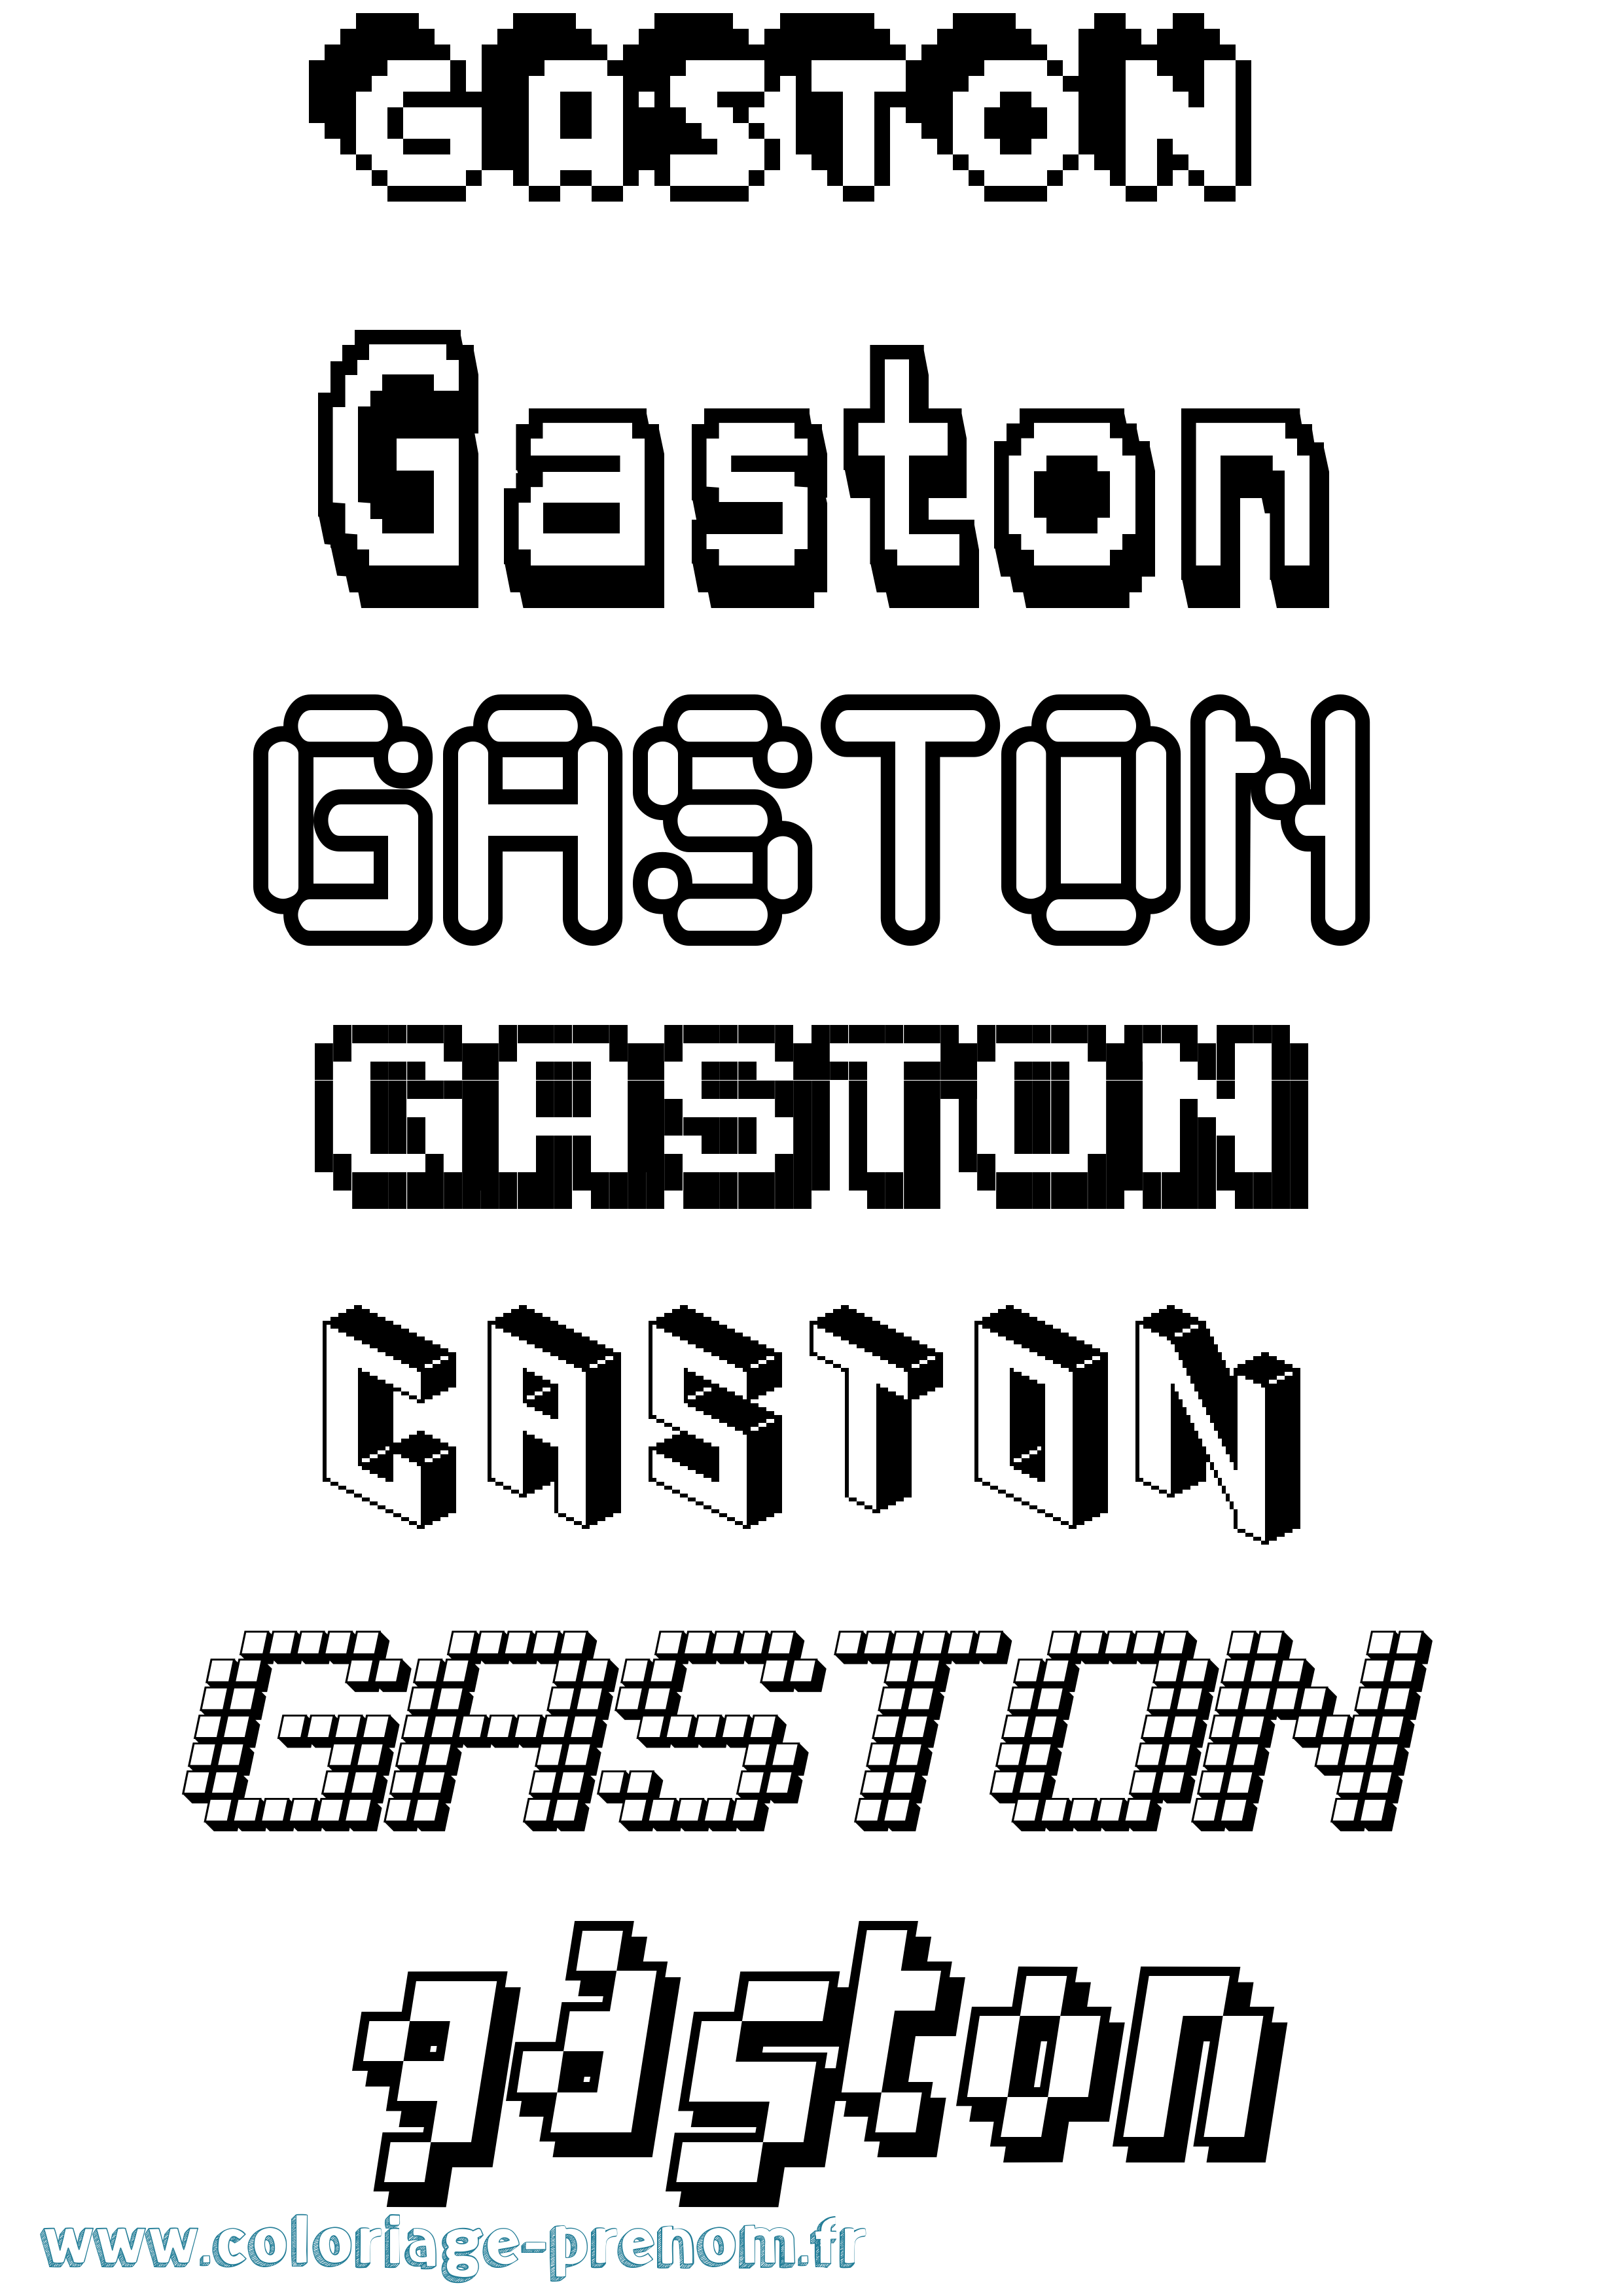 Coloriage prénom Gaston Pixel